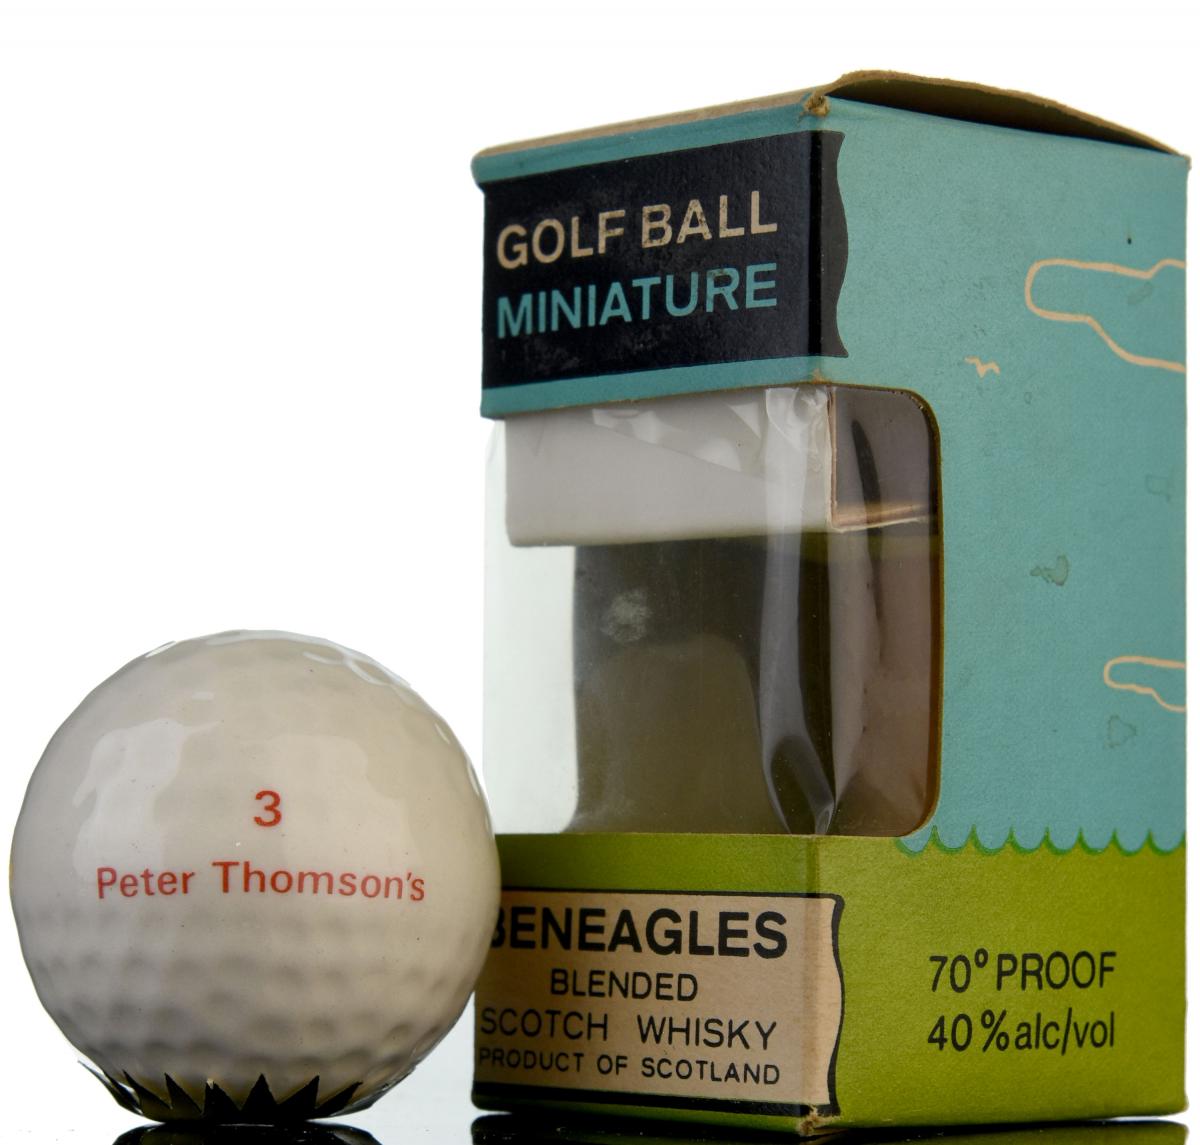 Beneagles Golf Ball Miniature